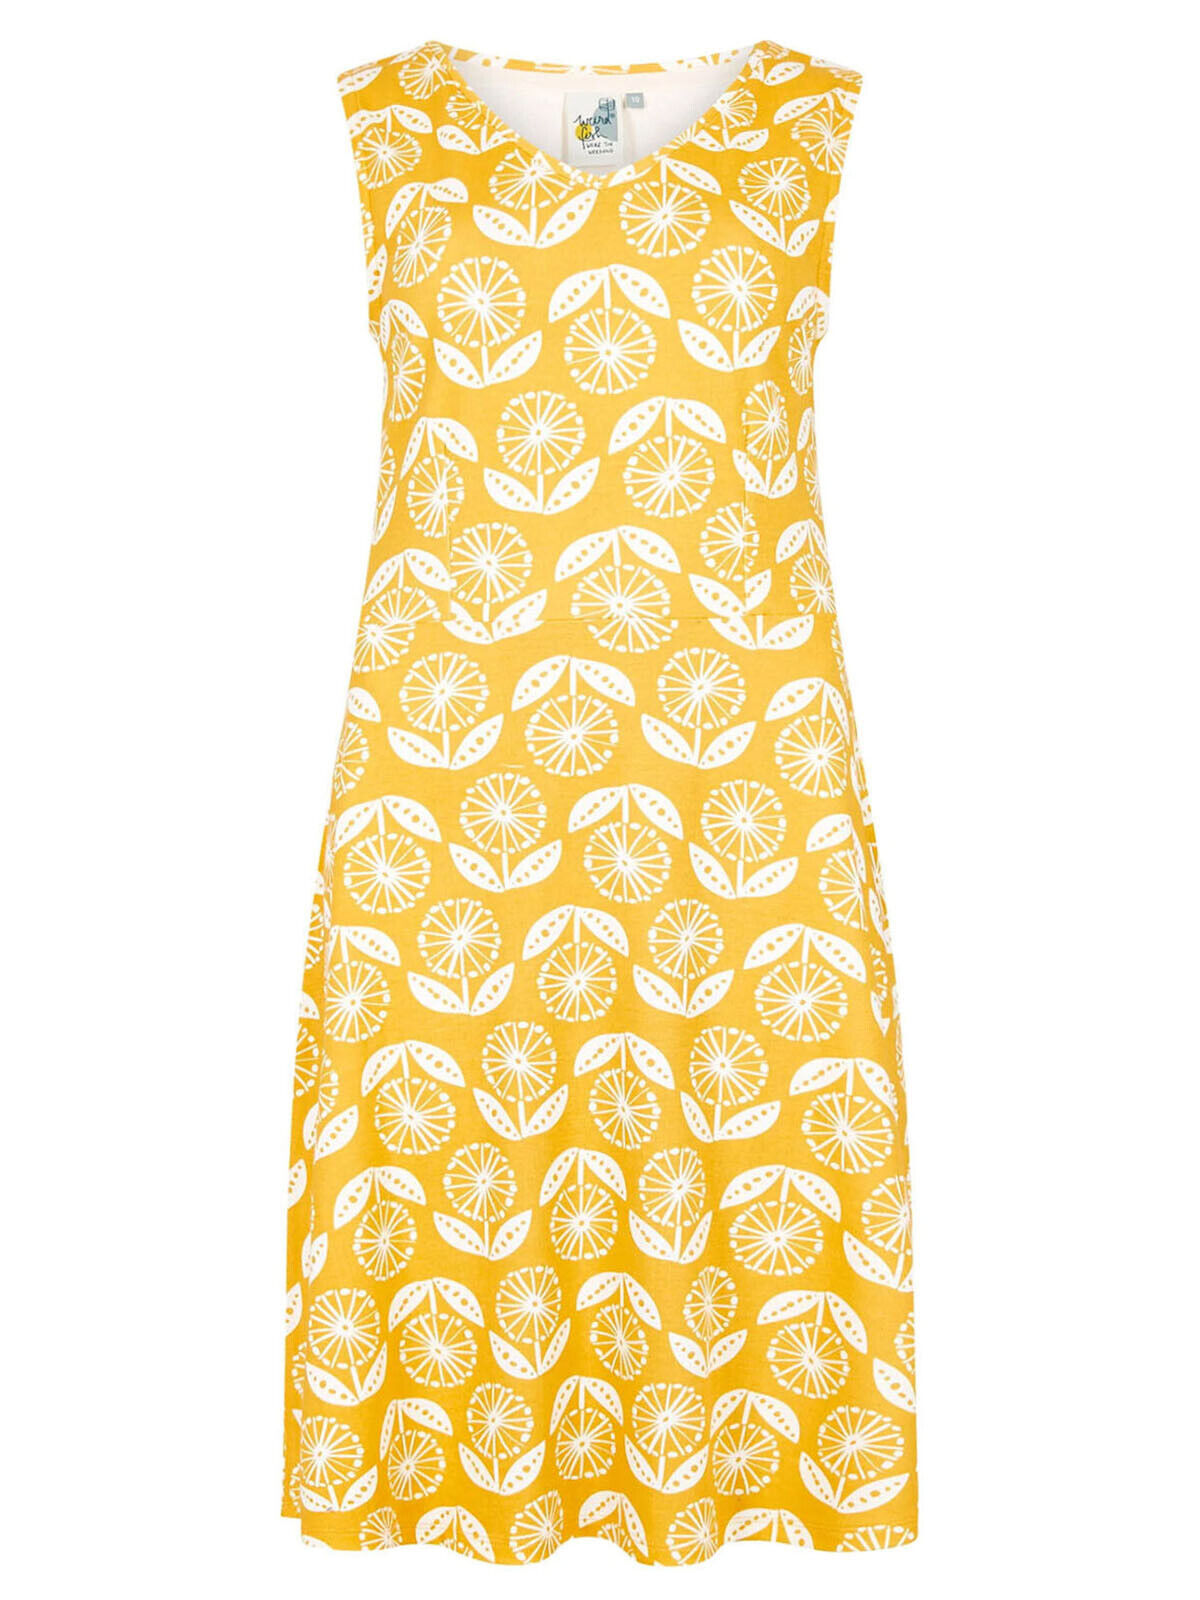 Weird Fish Sunshine Yellow Paisley Printed Jersey Dress 8 10 12 14 16 20 RRP £35